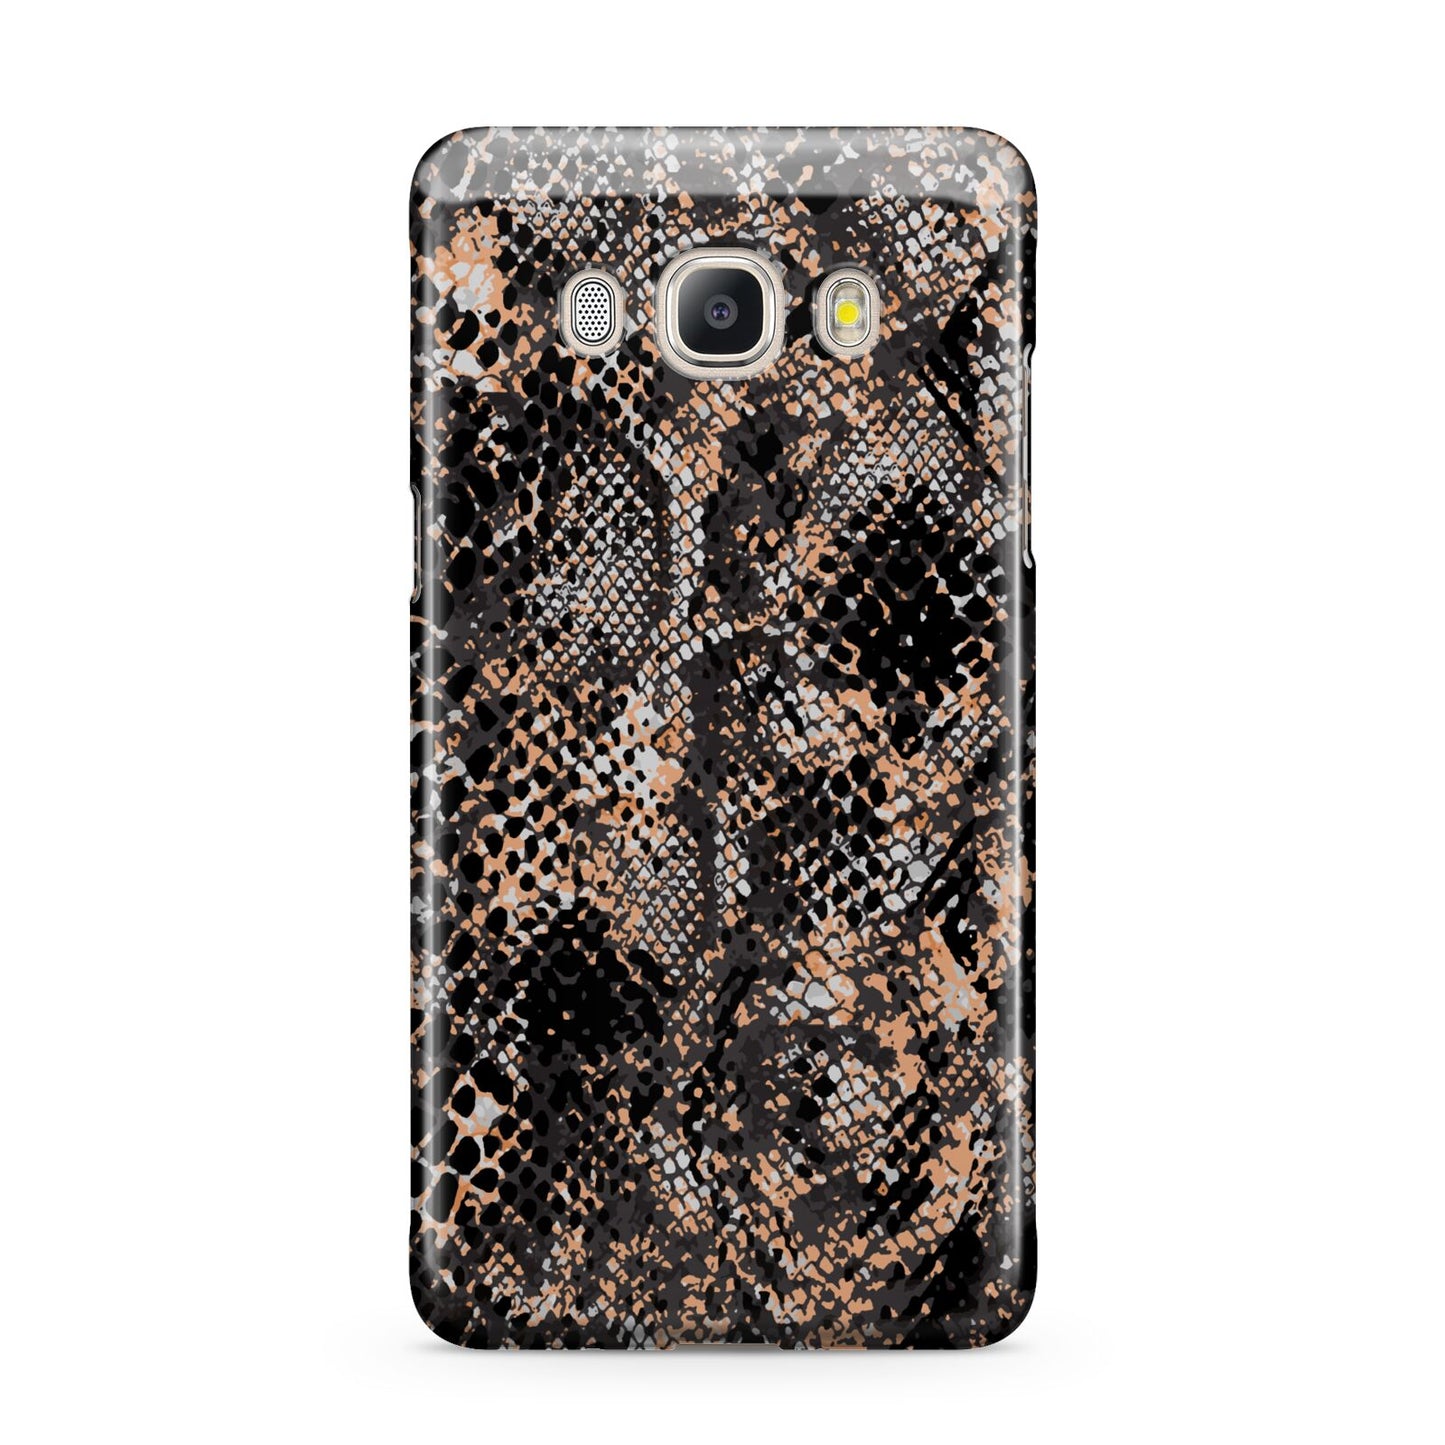 Snakeskin Print Samsung Galaxy J5 2016 Case